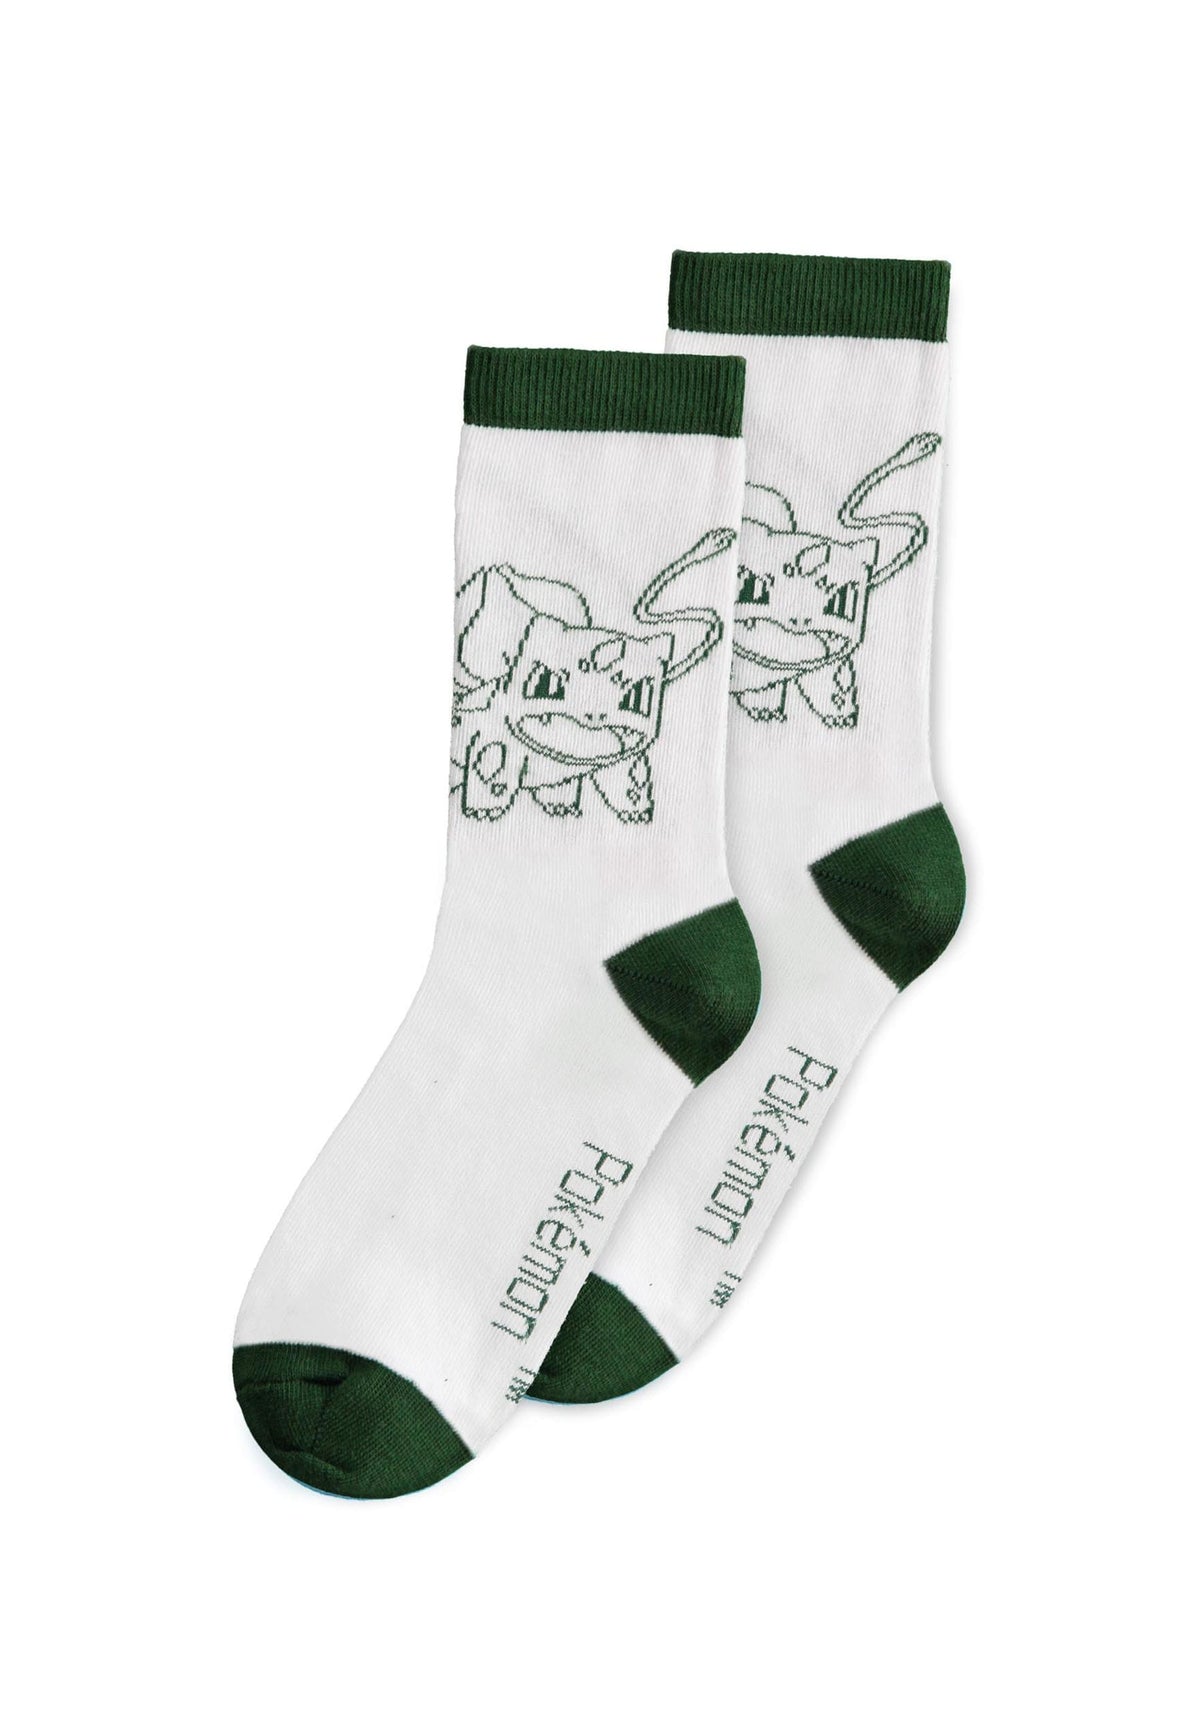 Pokemon - socks - Glumanda, BisaSam, Schiggy - 3 -pack - size 43-46 (difuzed)